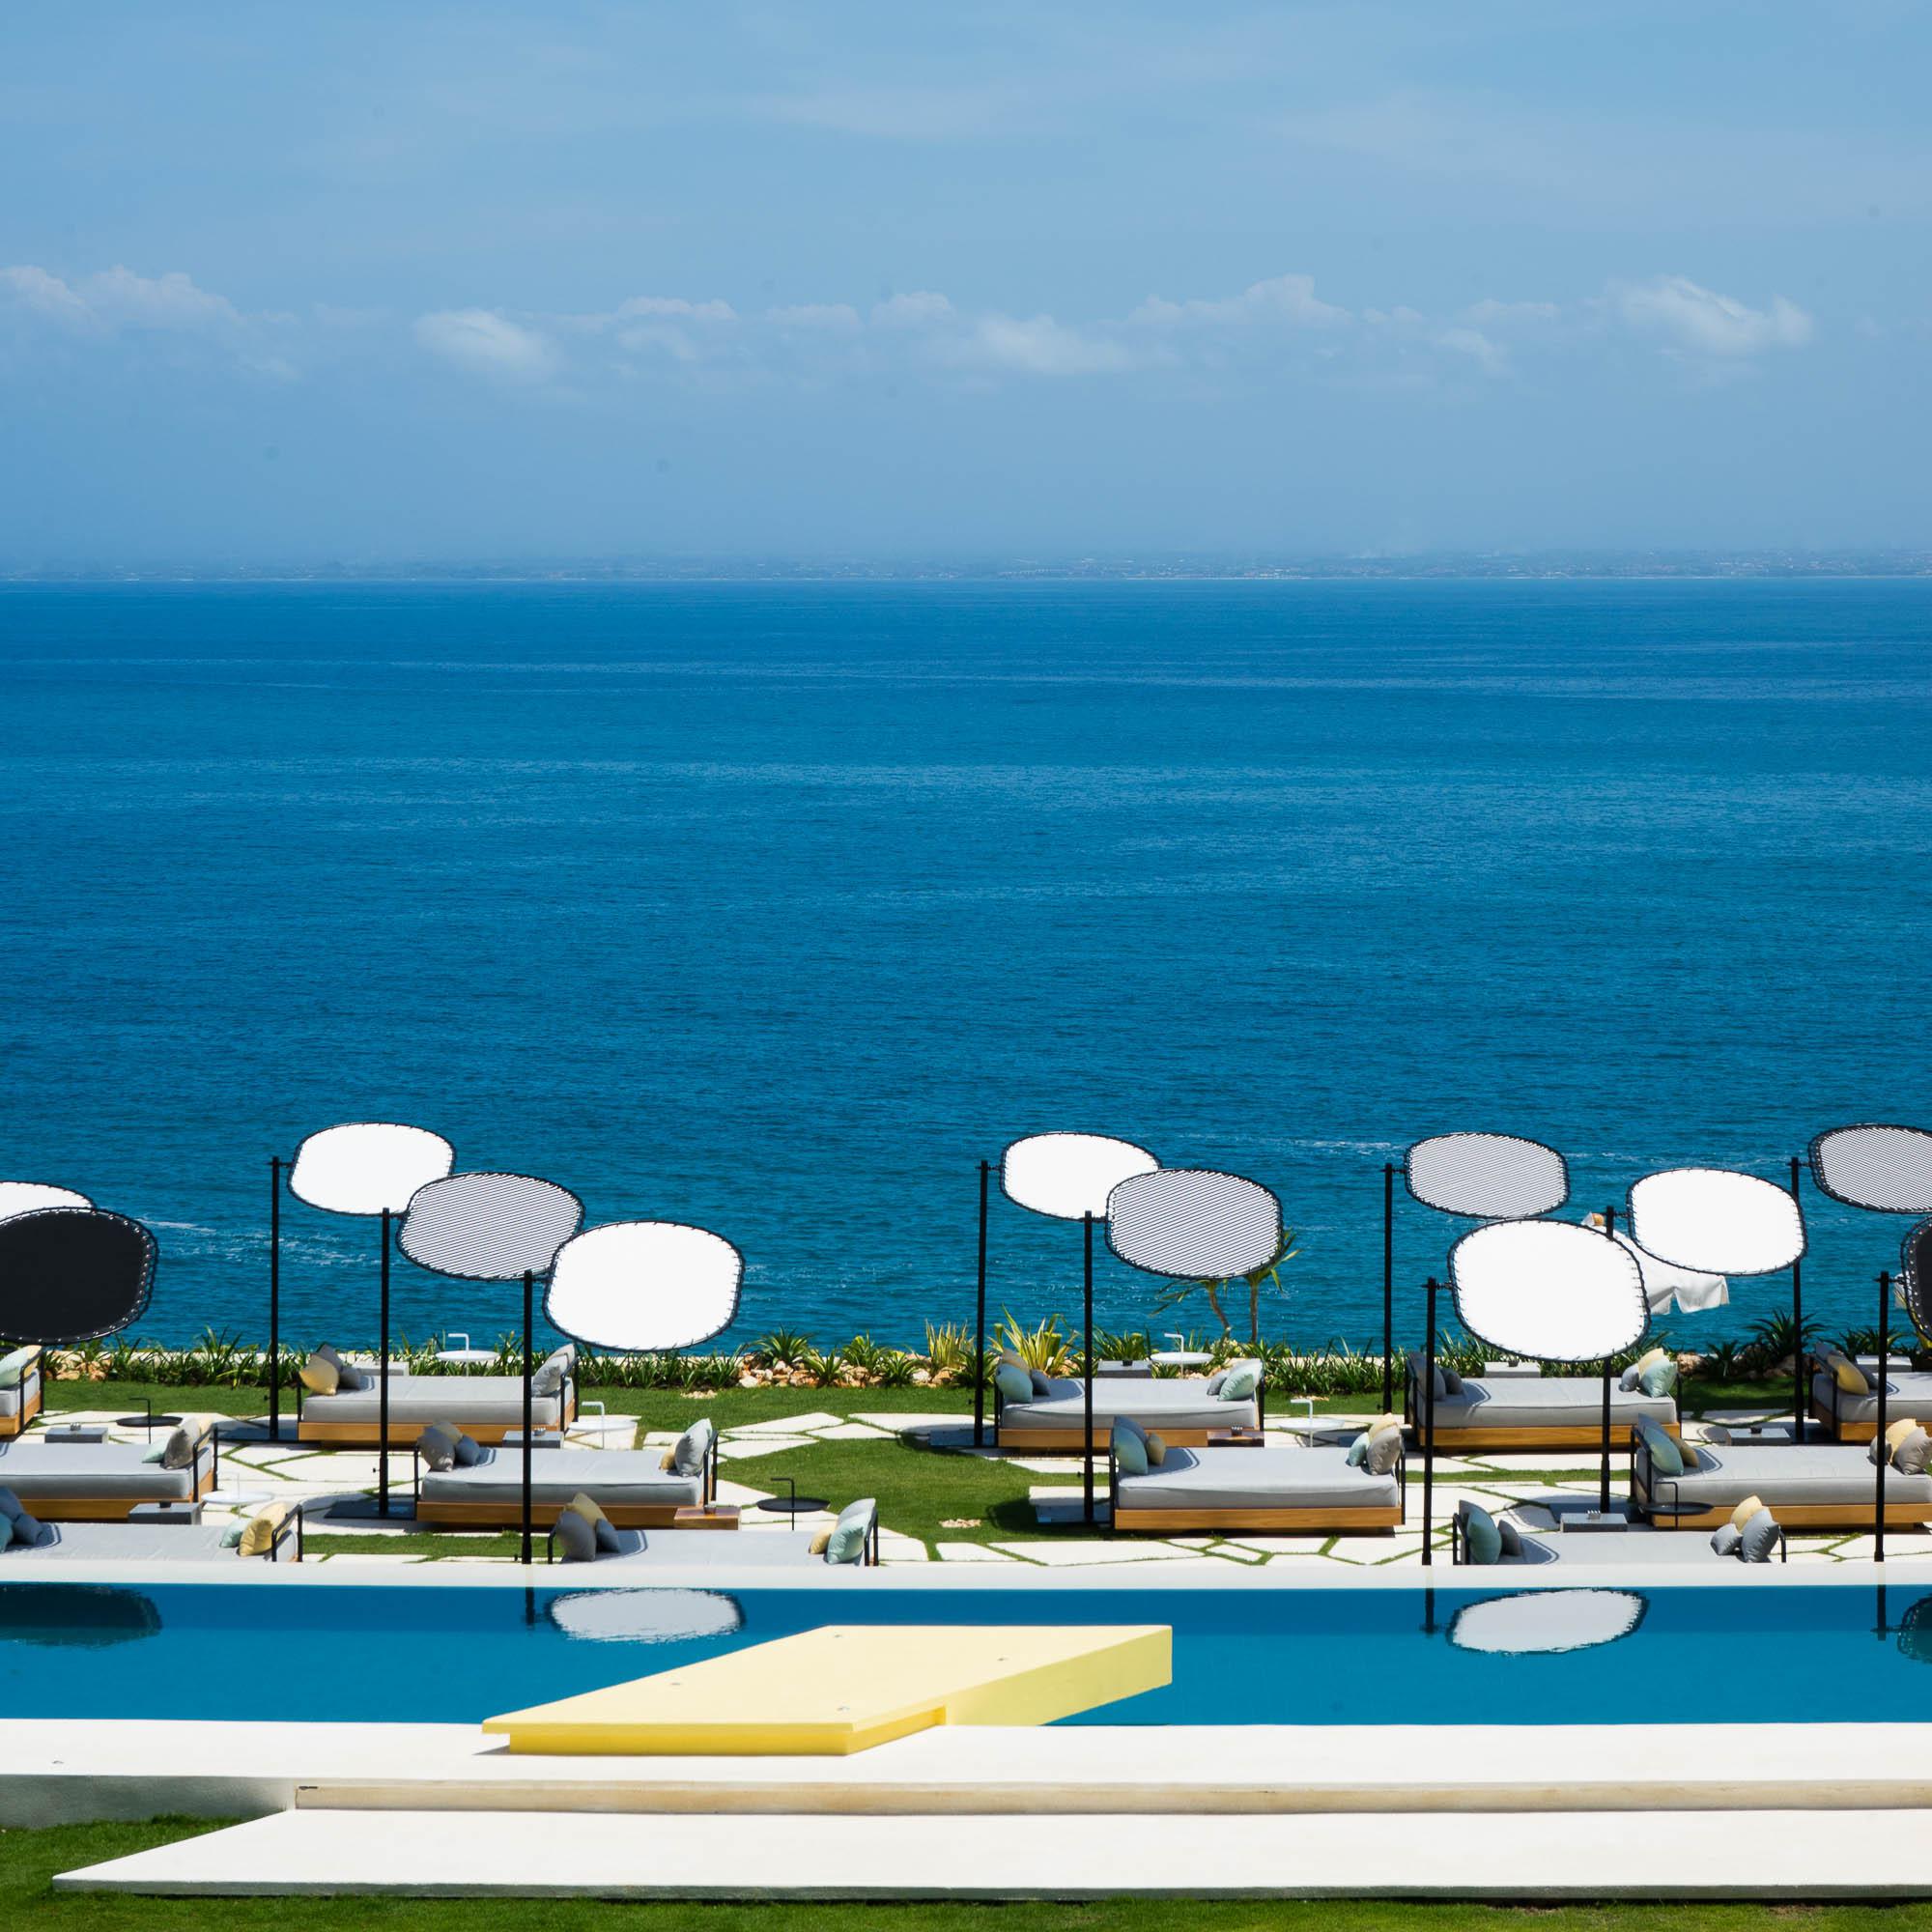 Ulu Cliff House - Beach Club in Bali - Interior Design - Bali Architect - Swimming Pool Area